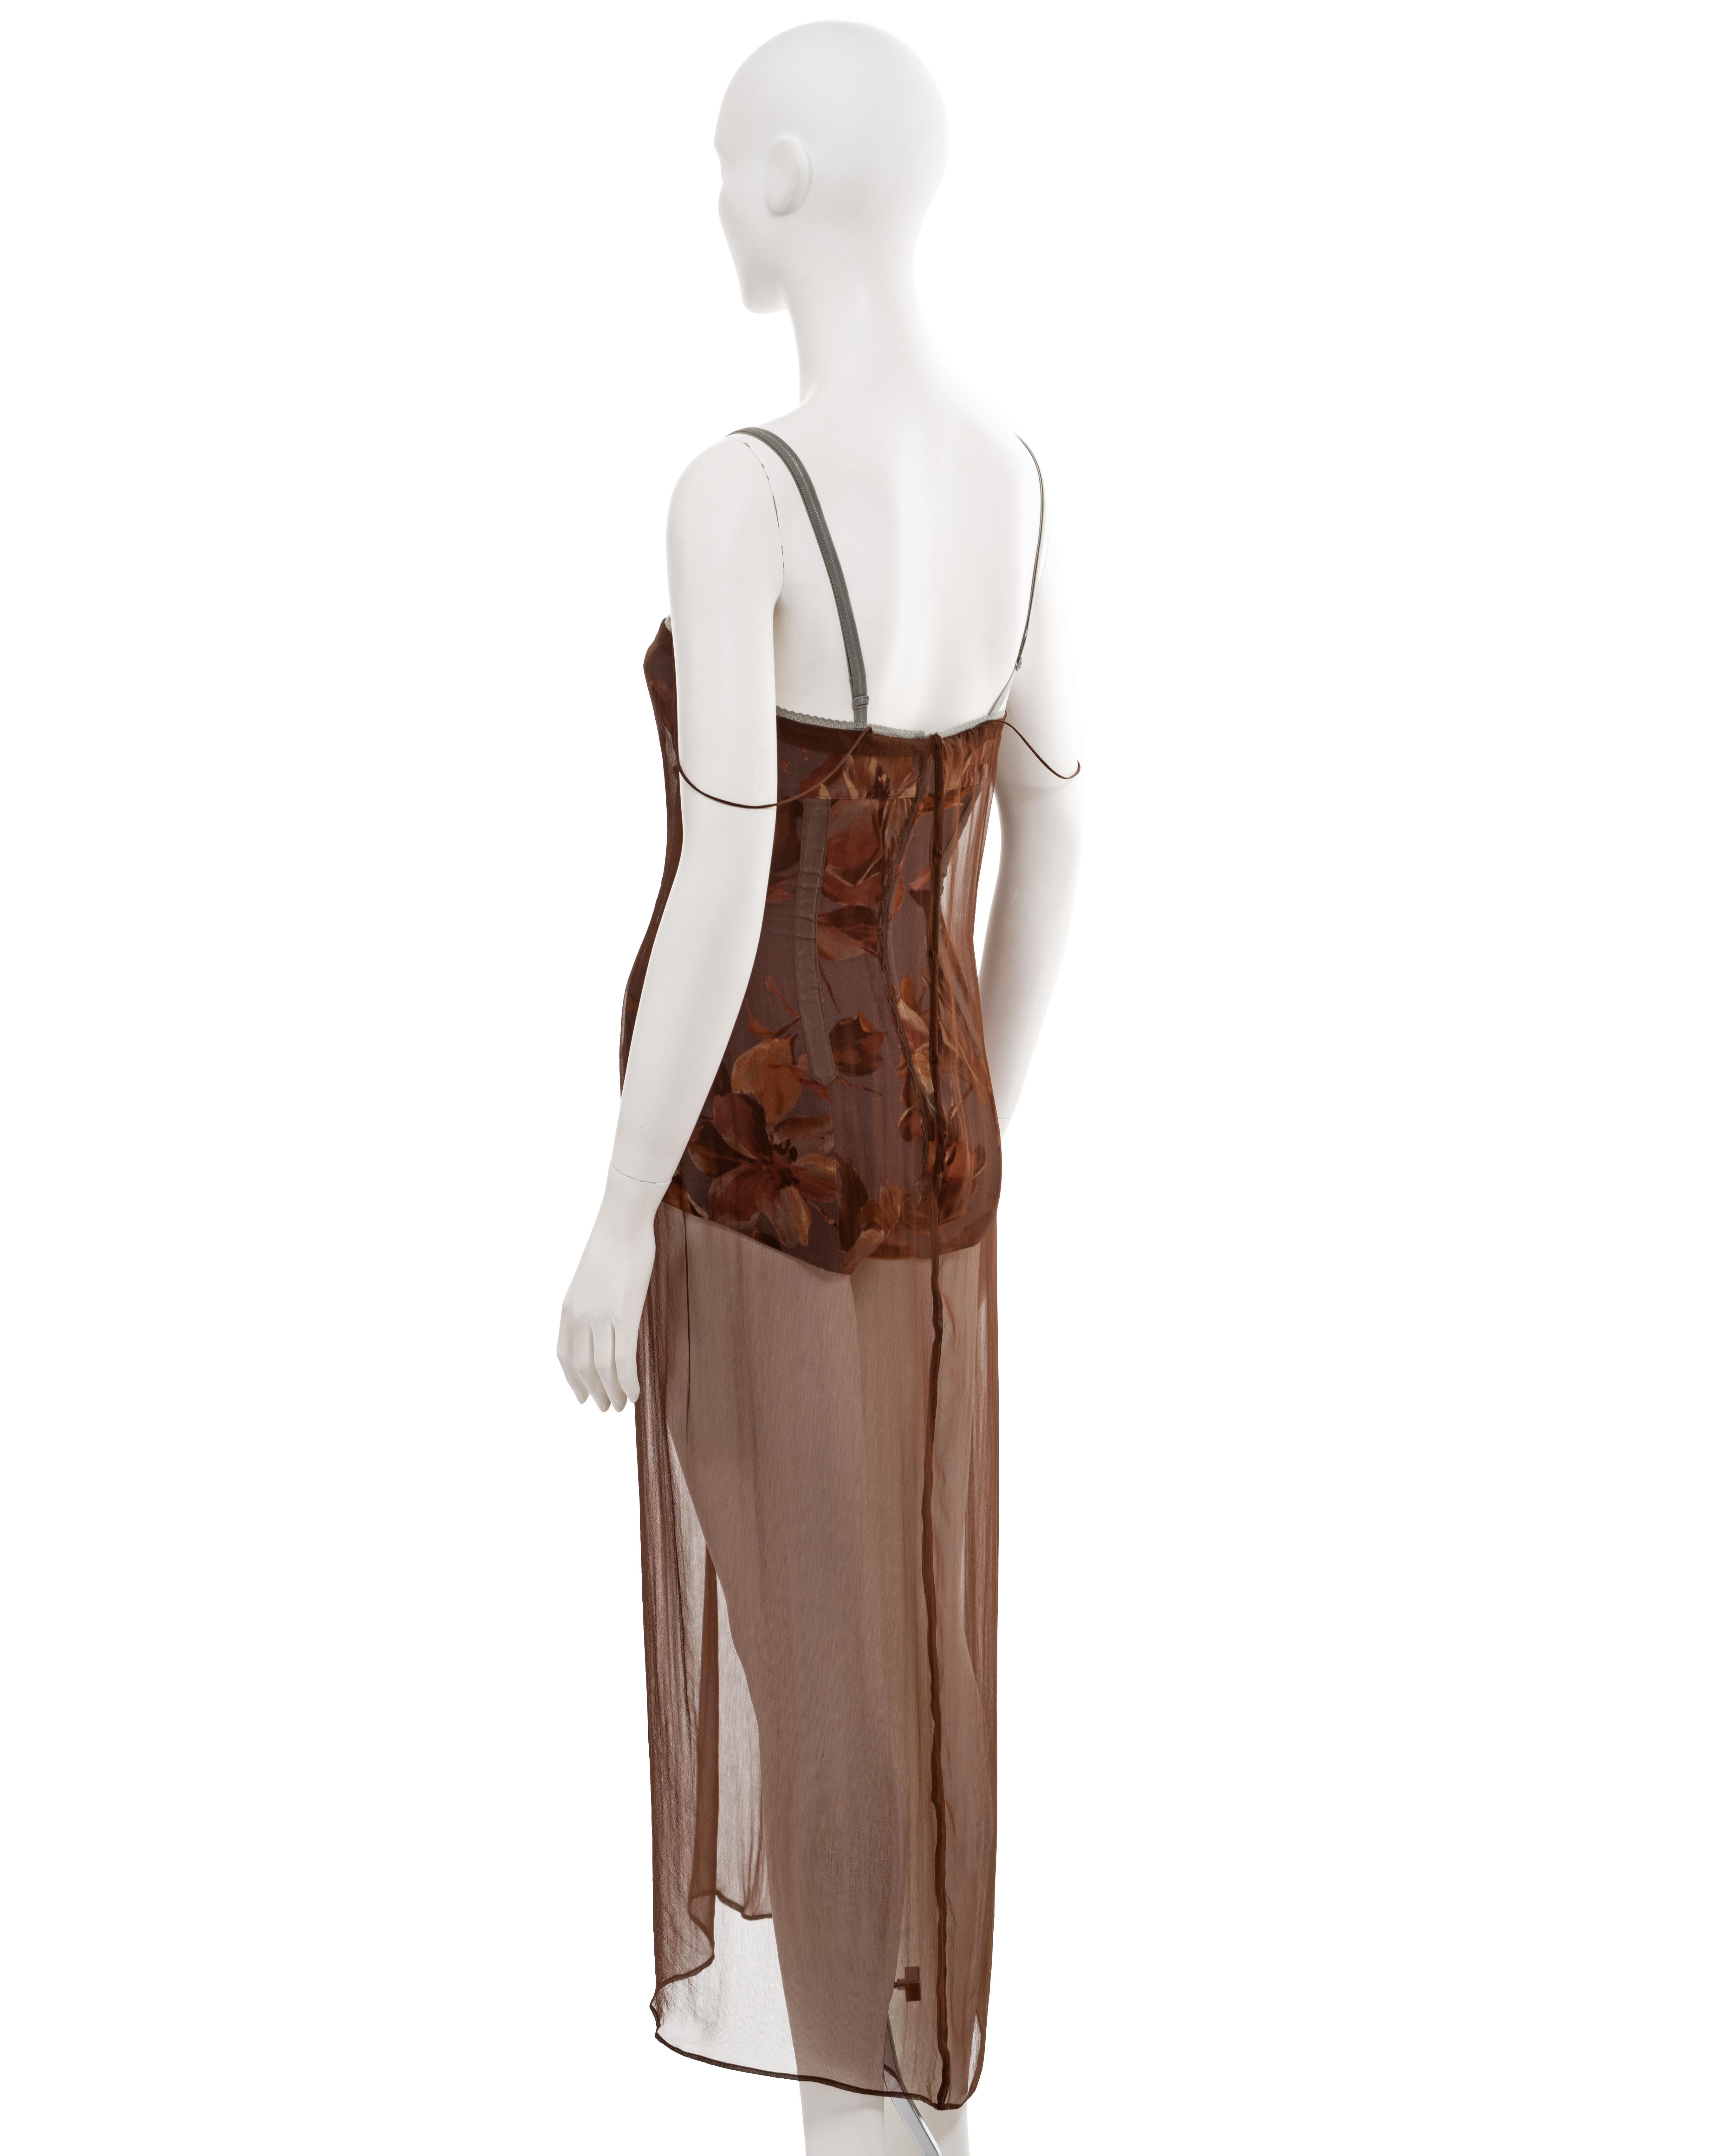 Dolce & Gabbana brown silk chiffon evening dress with built-in bodysuit, ss 1997 5